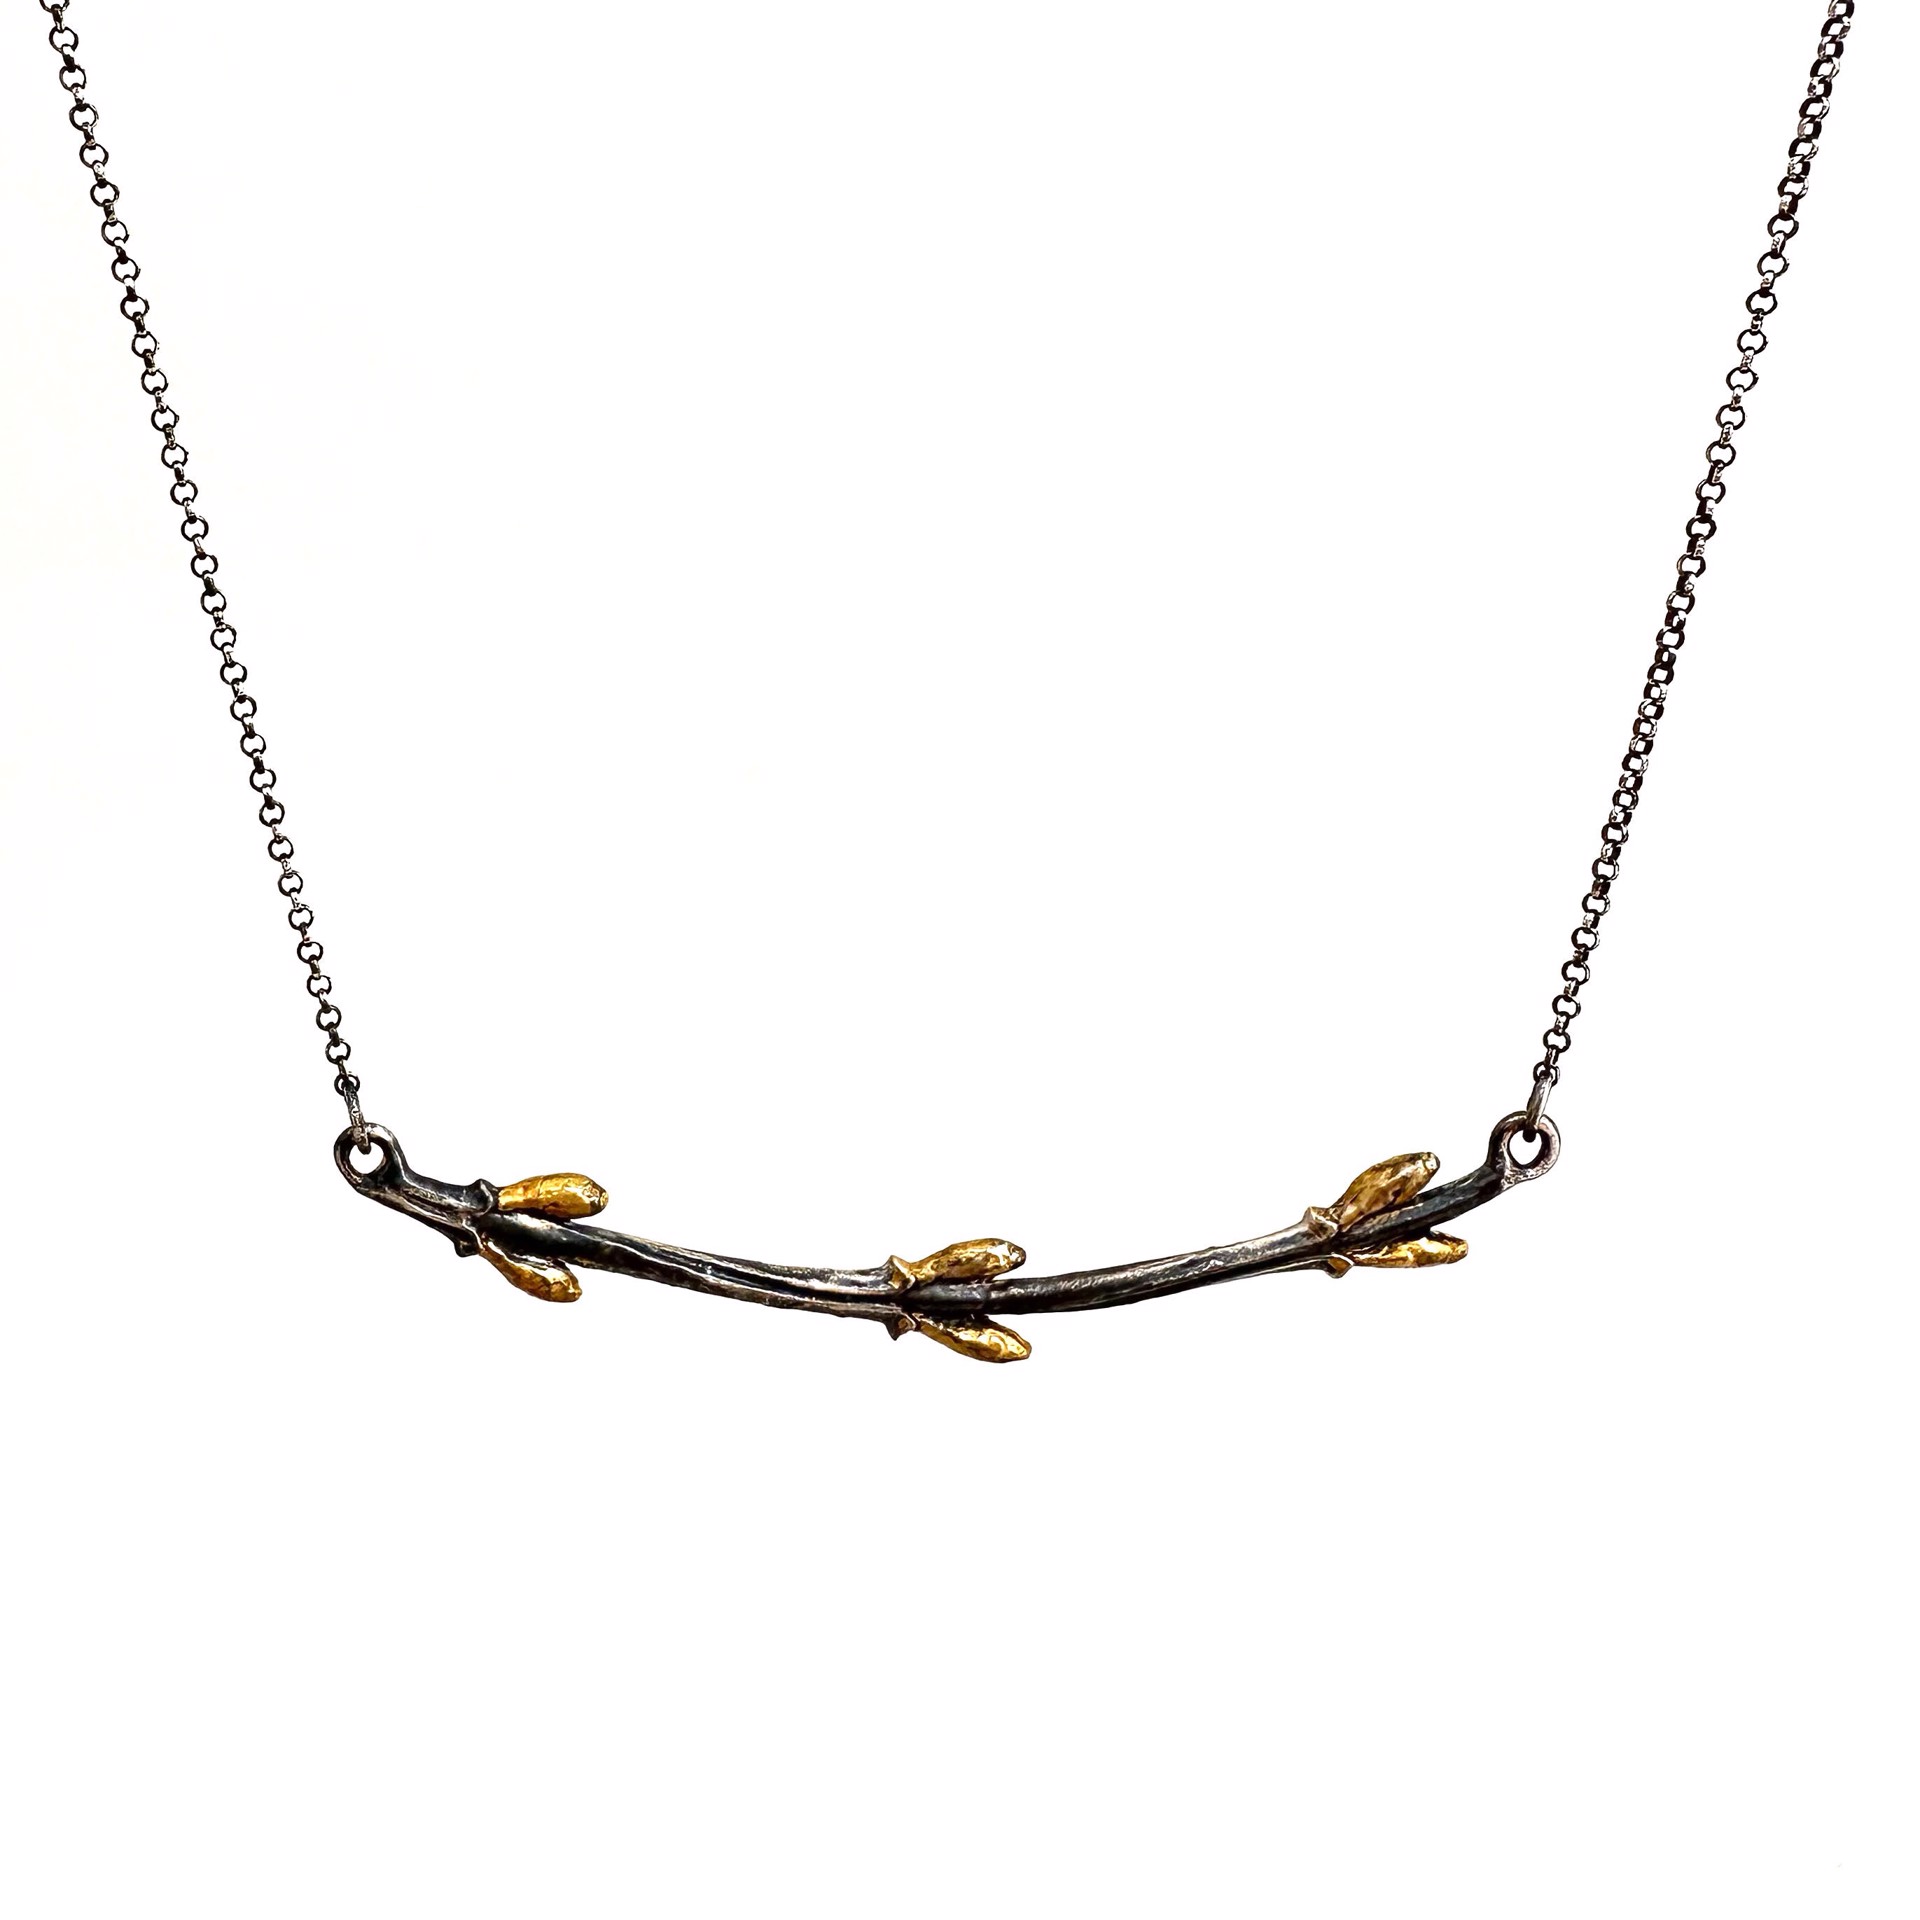 Forsythia necklace 24k large by Sara Thompson